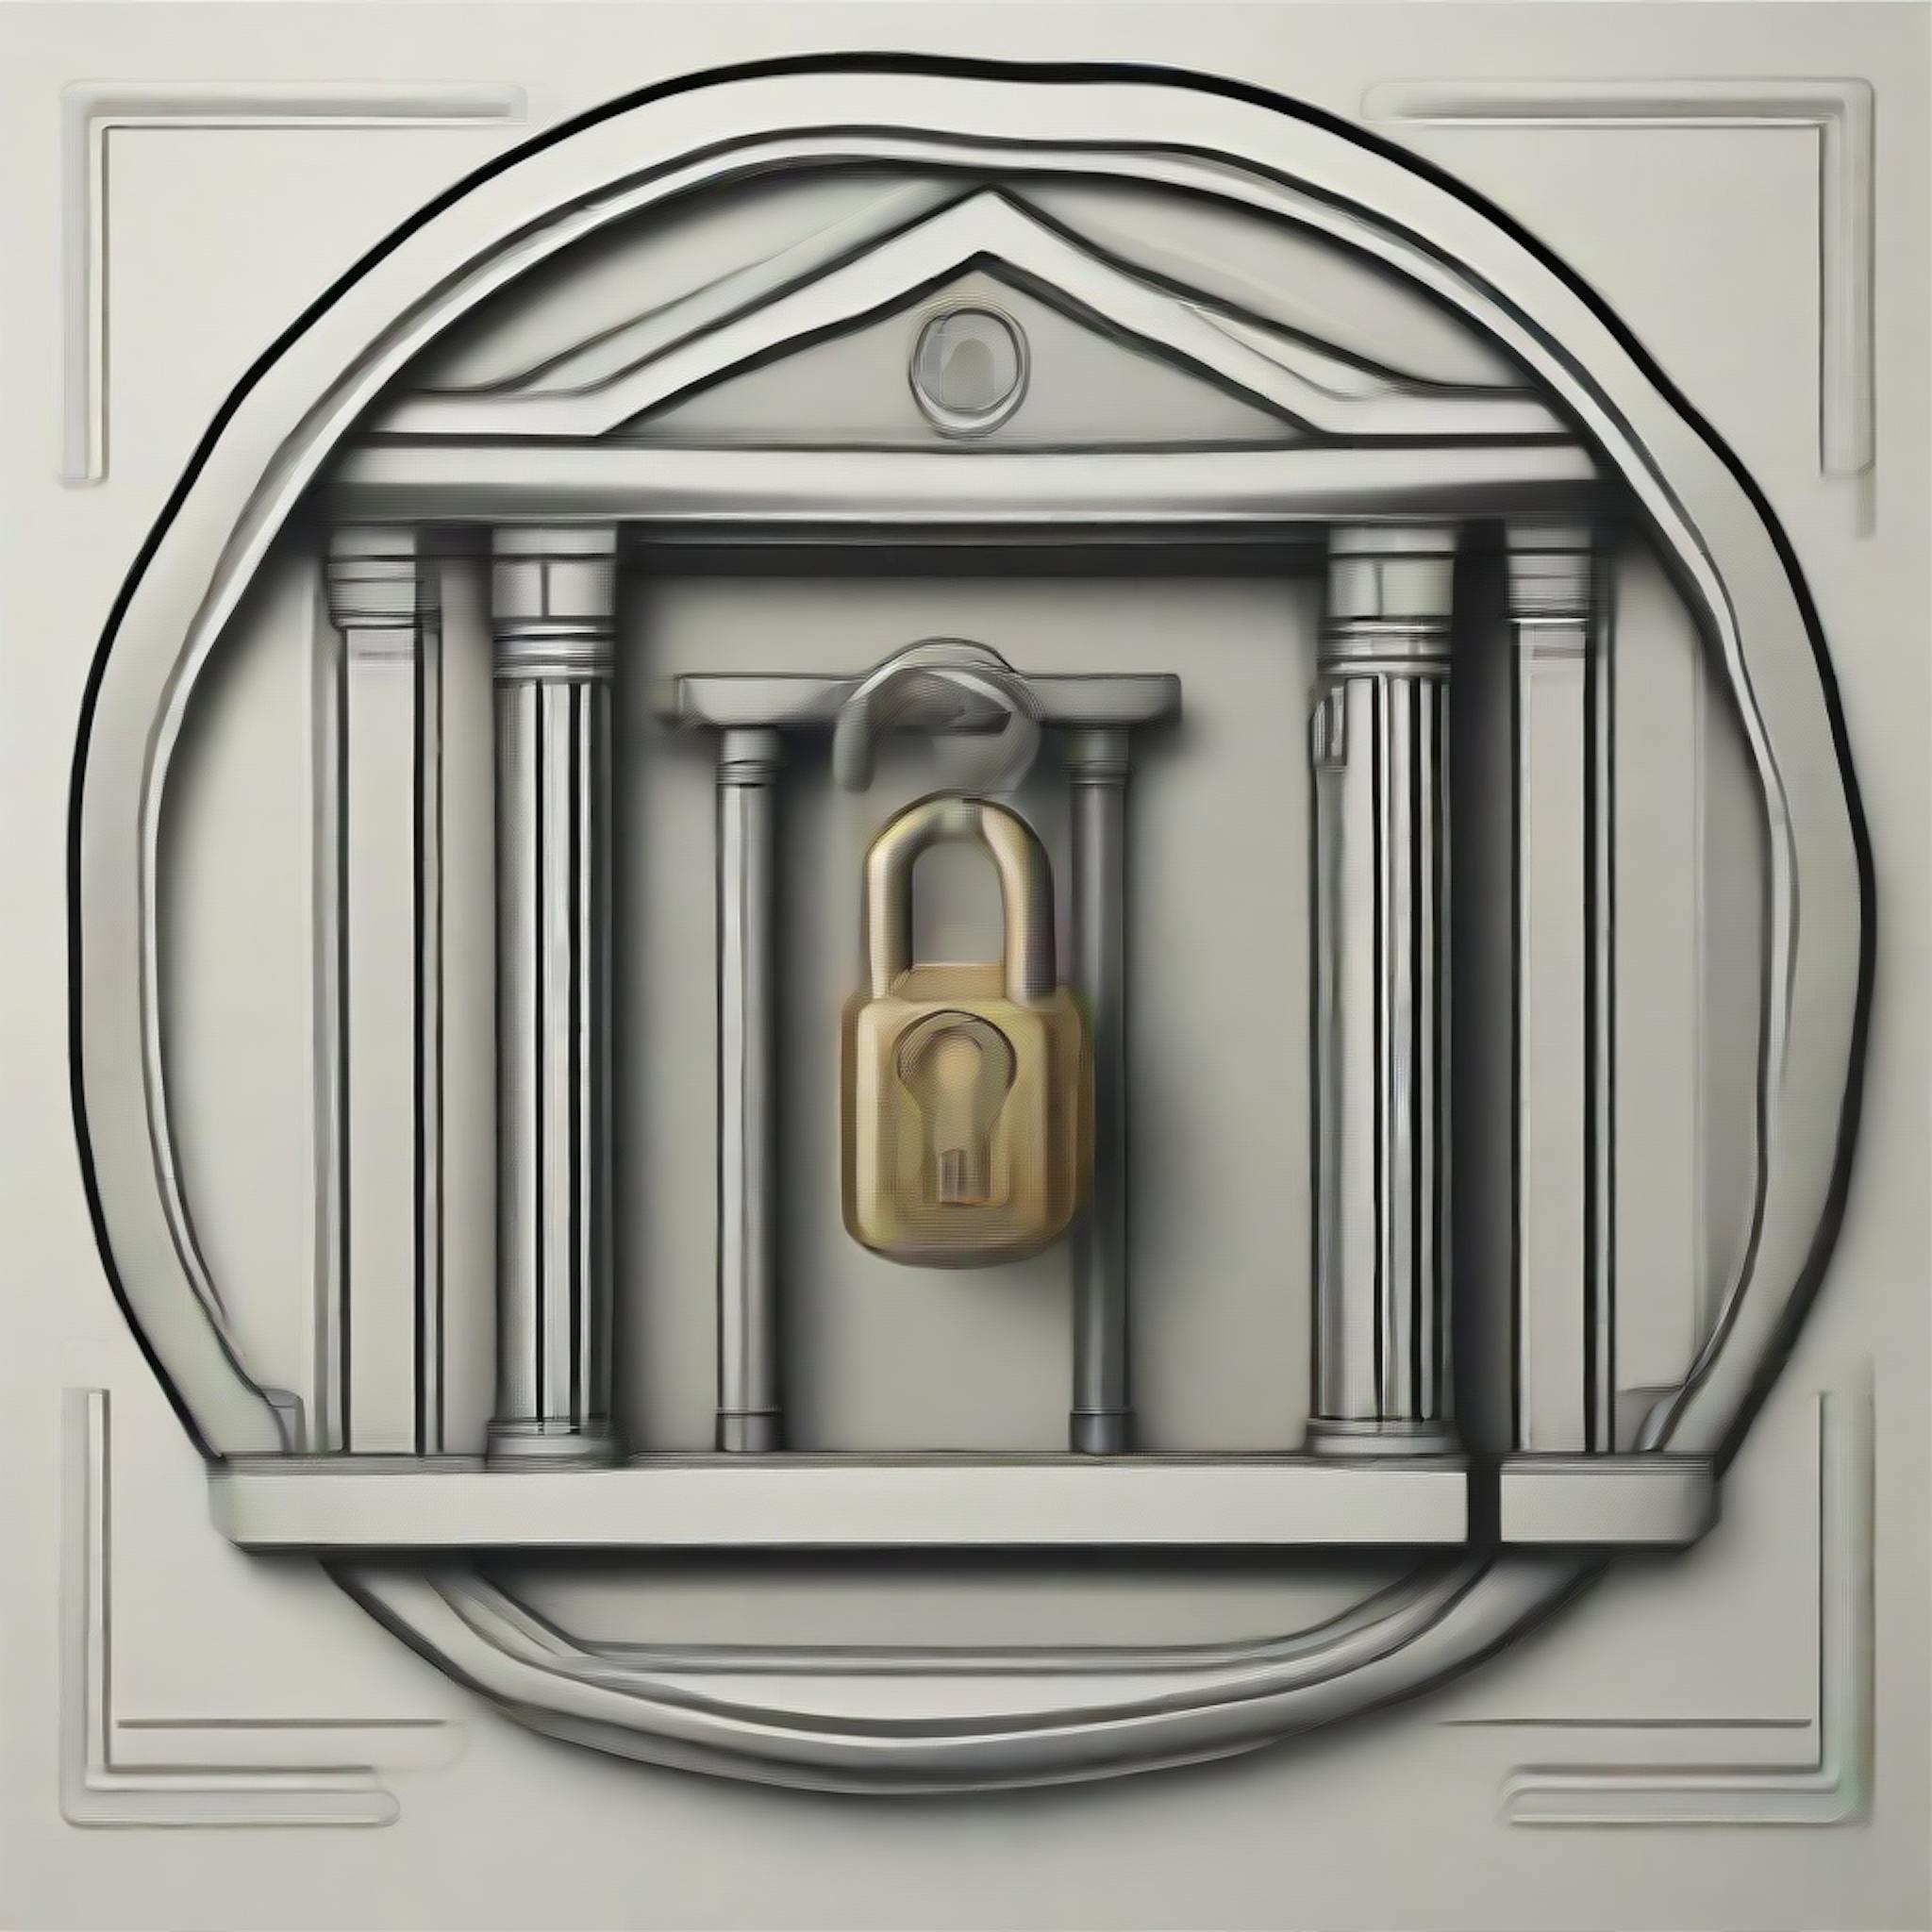 featured image - 은행의 클라우드 보안이란 무엇입니까?